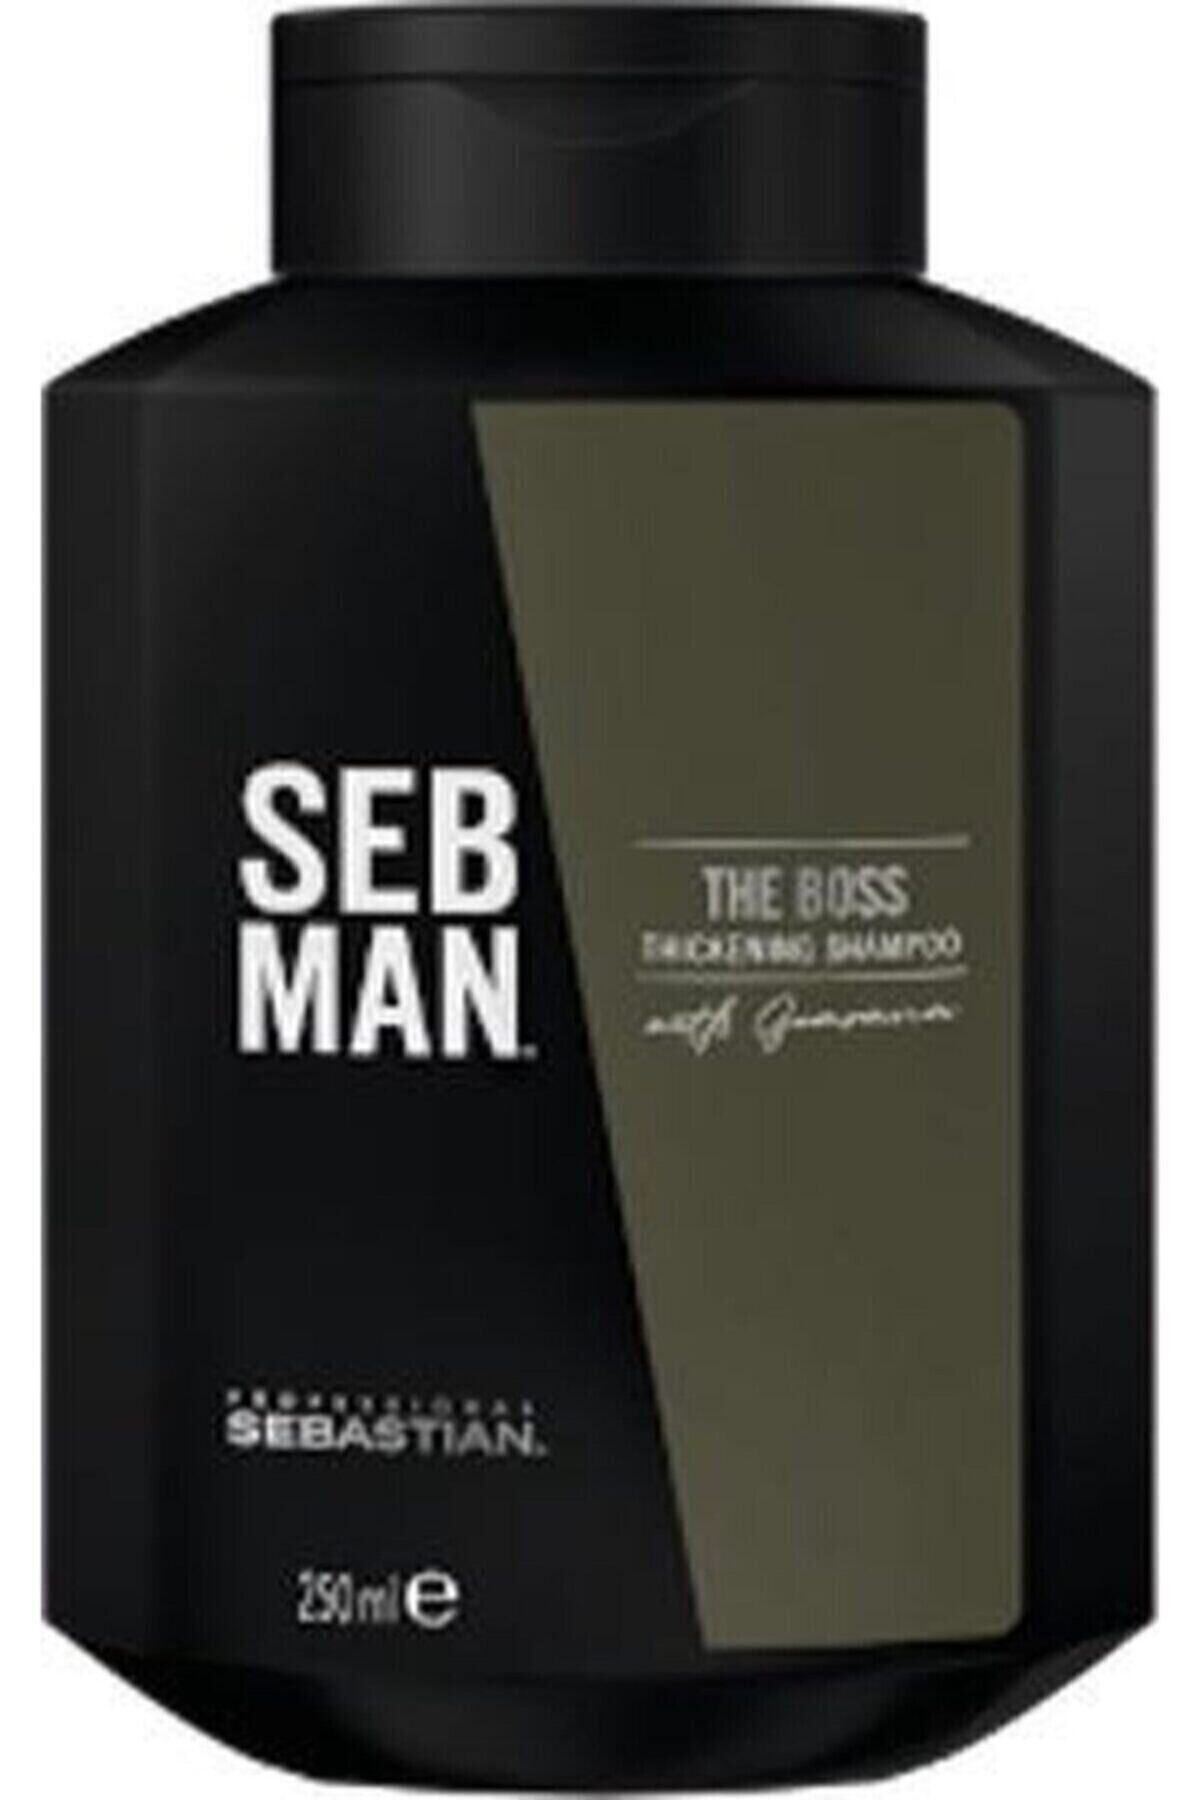 Sebastian Seb Man The Boss Hair Thickening Shampoo 250ml - Yeni Saç Çıkartıcı KeyÜrün1058